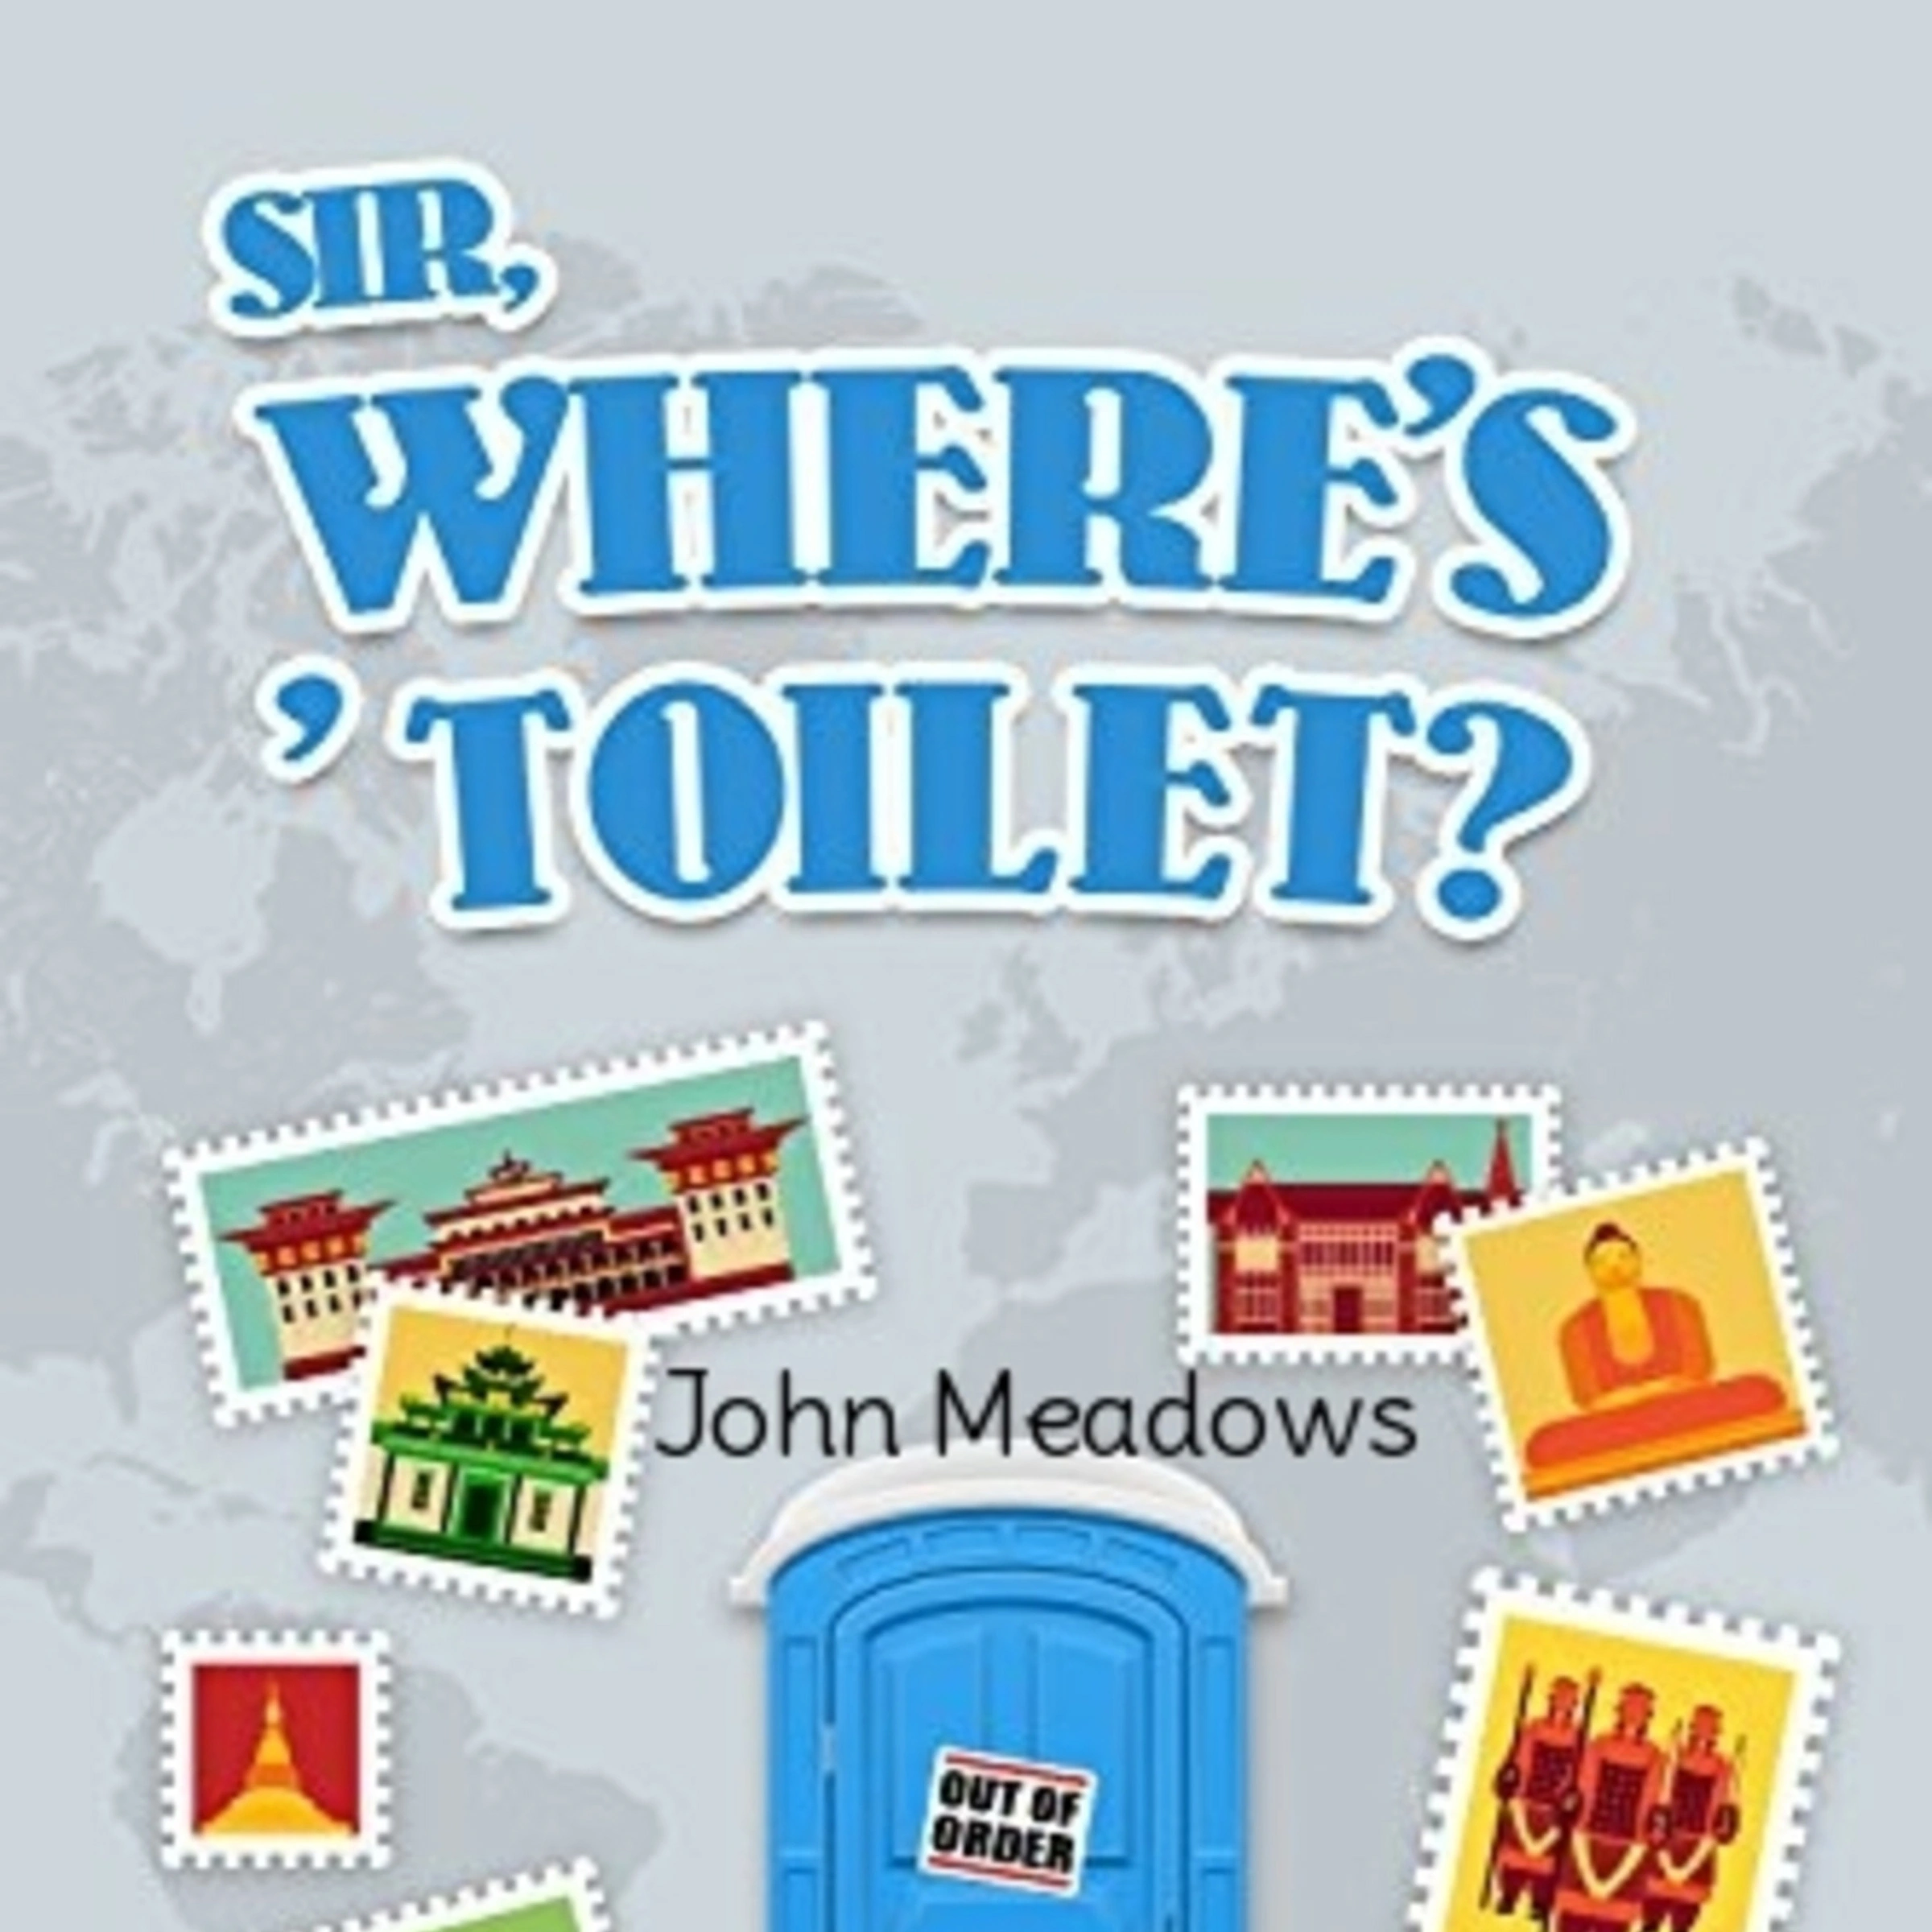 Sir, Where's 'Toilet? by John Meadows Audiobook